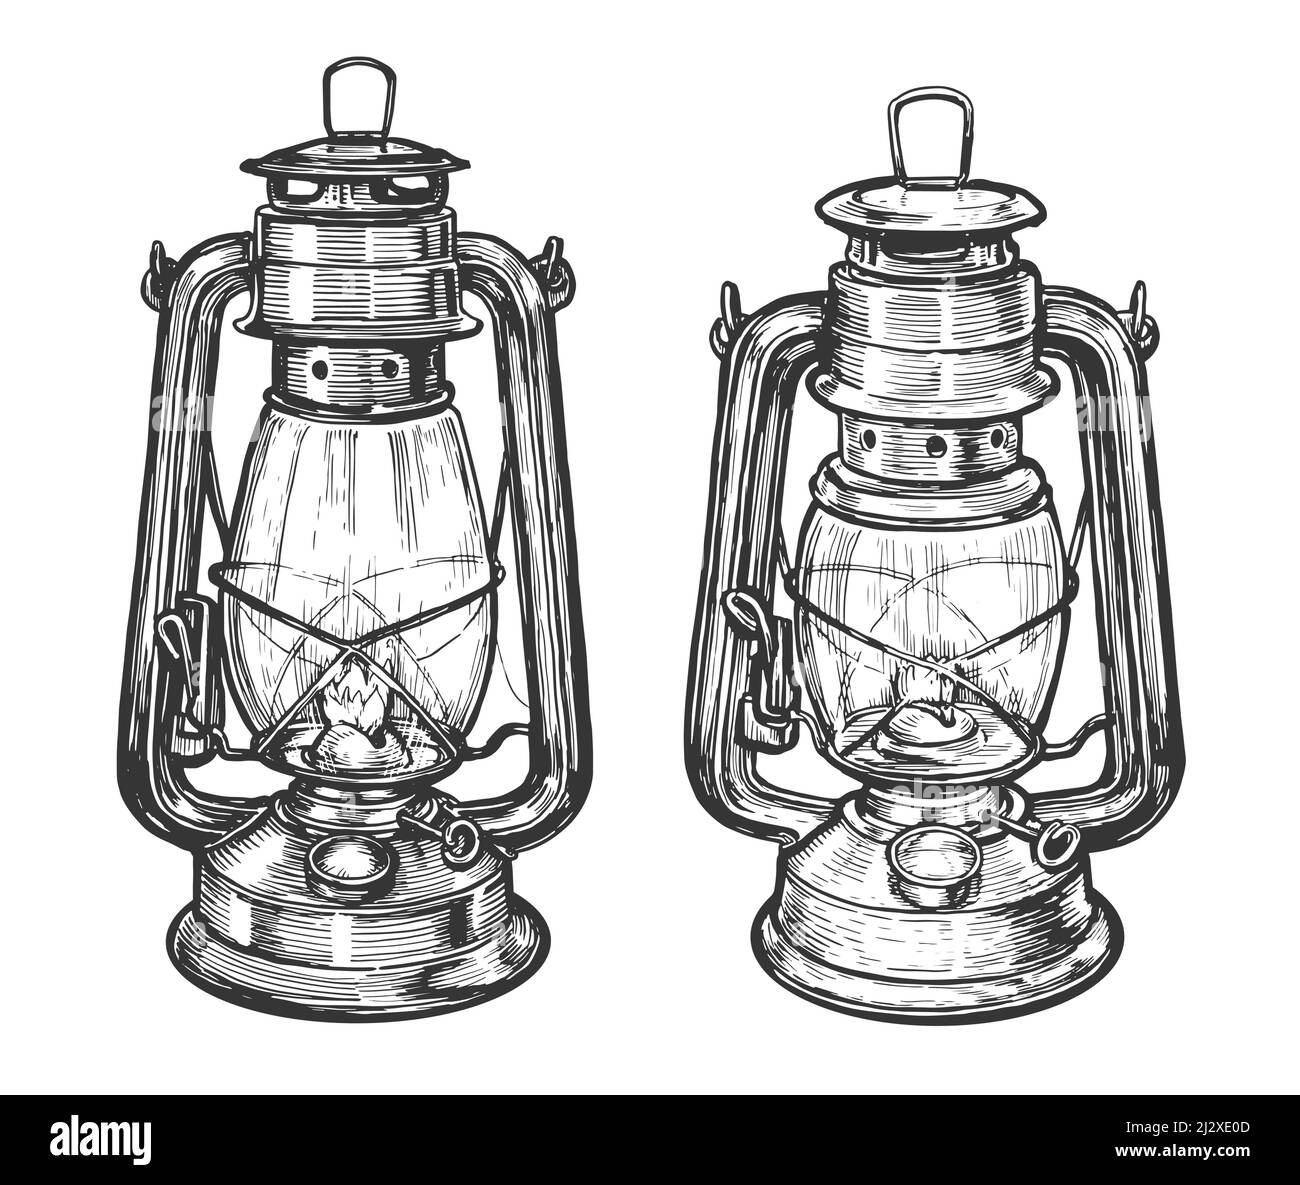 Kerosene lamp sketch vector. Oil lantern drawn in vintage engraving style Stock Vector